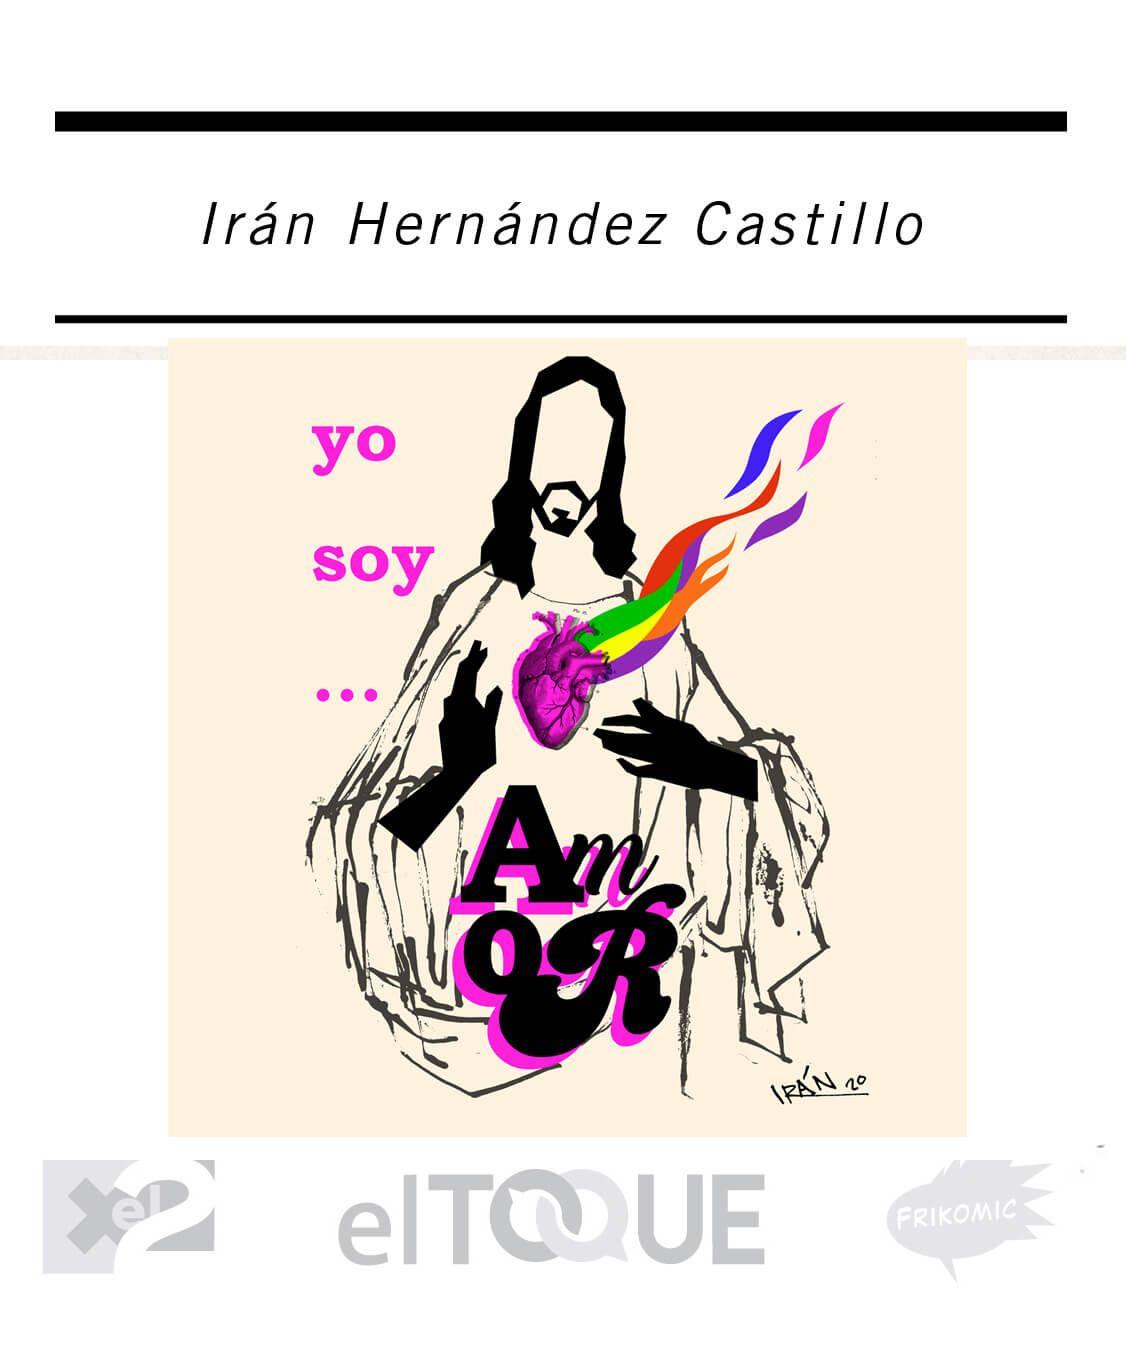 2020-06-Hernandez-Iran-XEL2-SUPLEMENTO-HUMORISTICO-CUBA-MATRIMONIO-IGUALITARIO-LGBTIQ.jpg